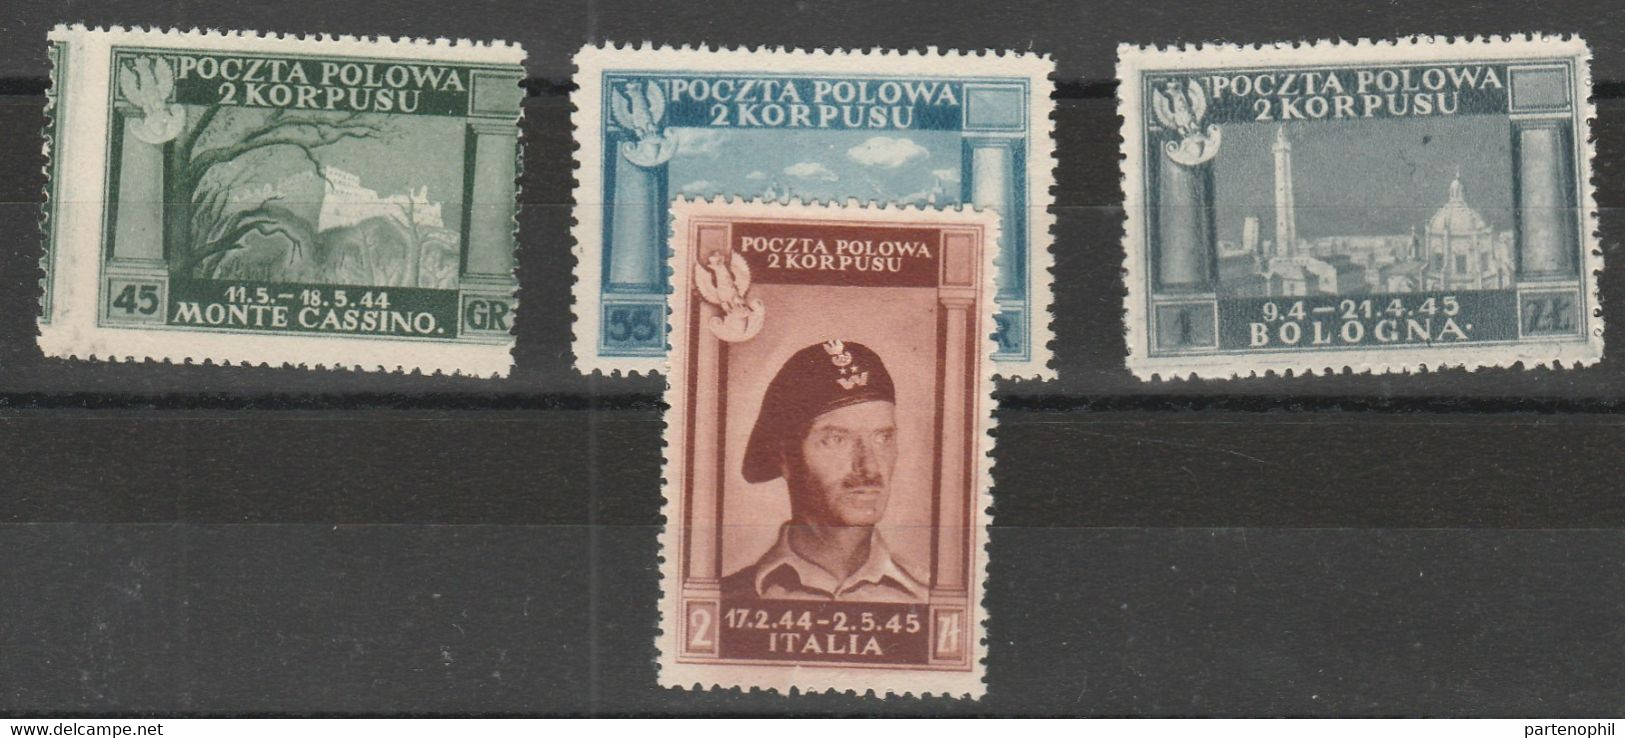 Corpo Polacco  235 - Vittorie Polacche N. 5/8. Cert. Biondi Cat. € 700,00. SPL - 1946-47 Corpo Polacco Period